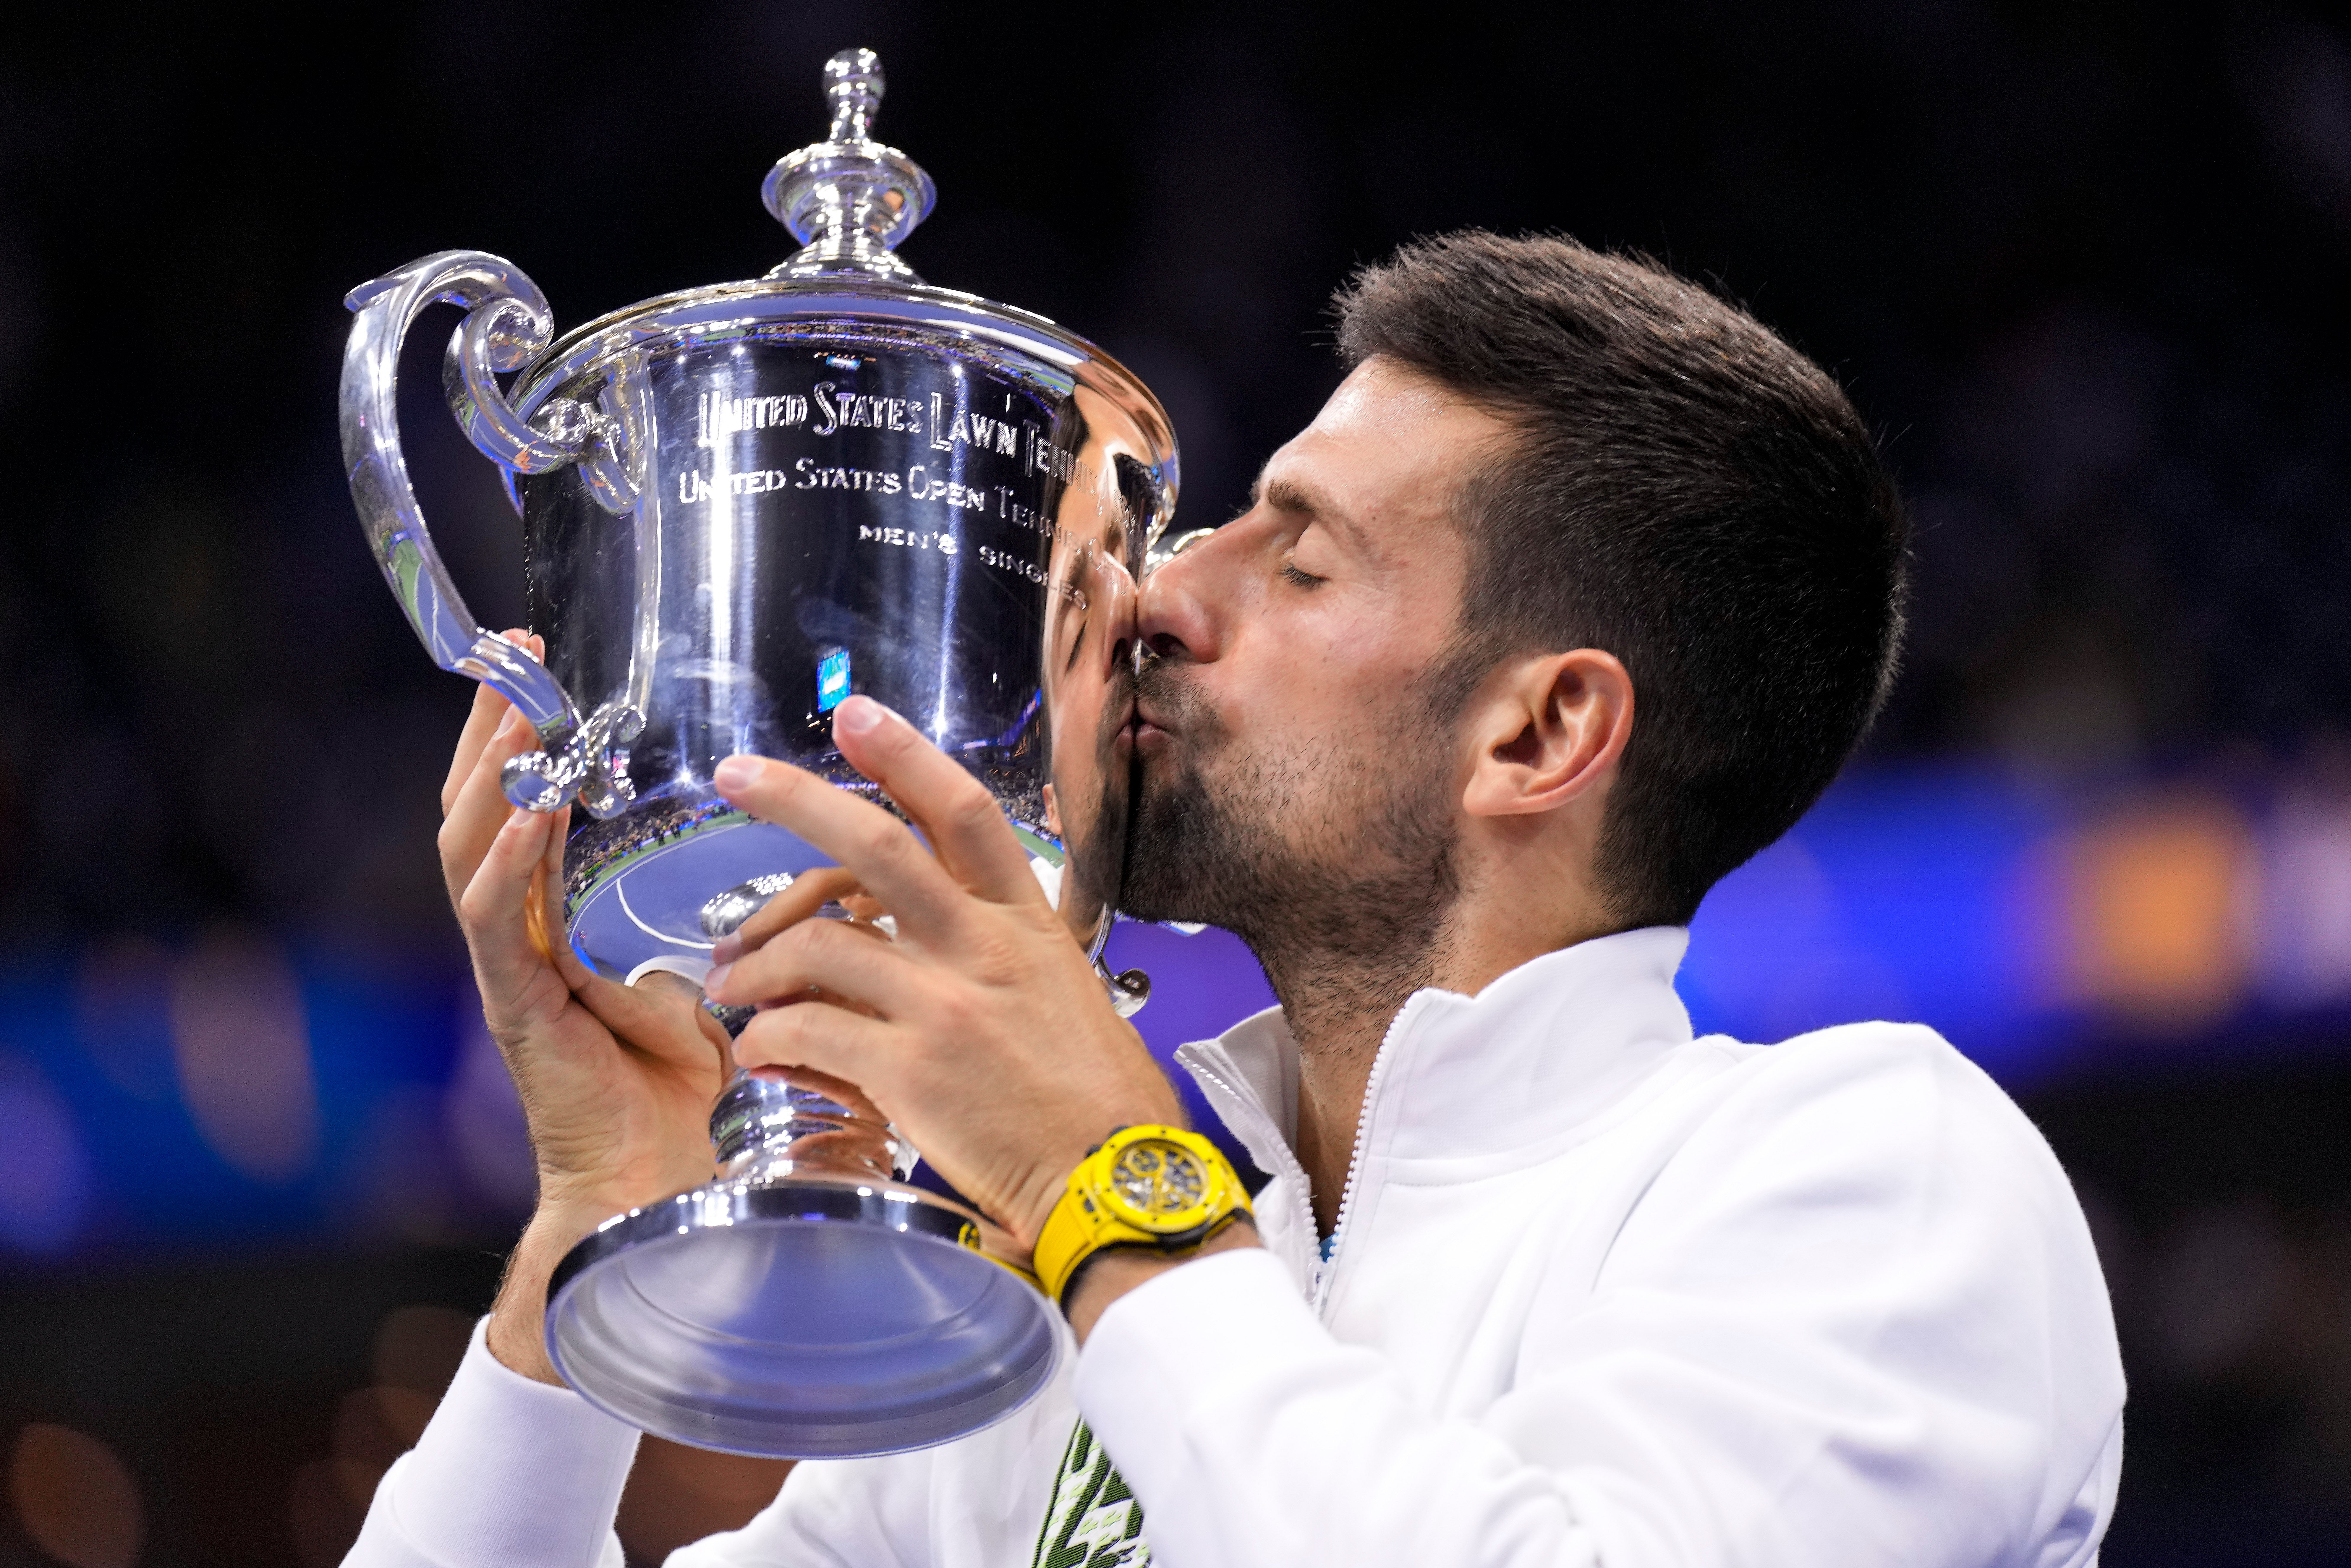 Novak Djokovic vs Daniil Medvedev: Where to watch, TV schedule